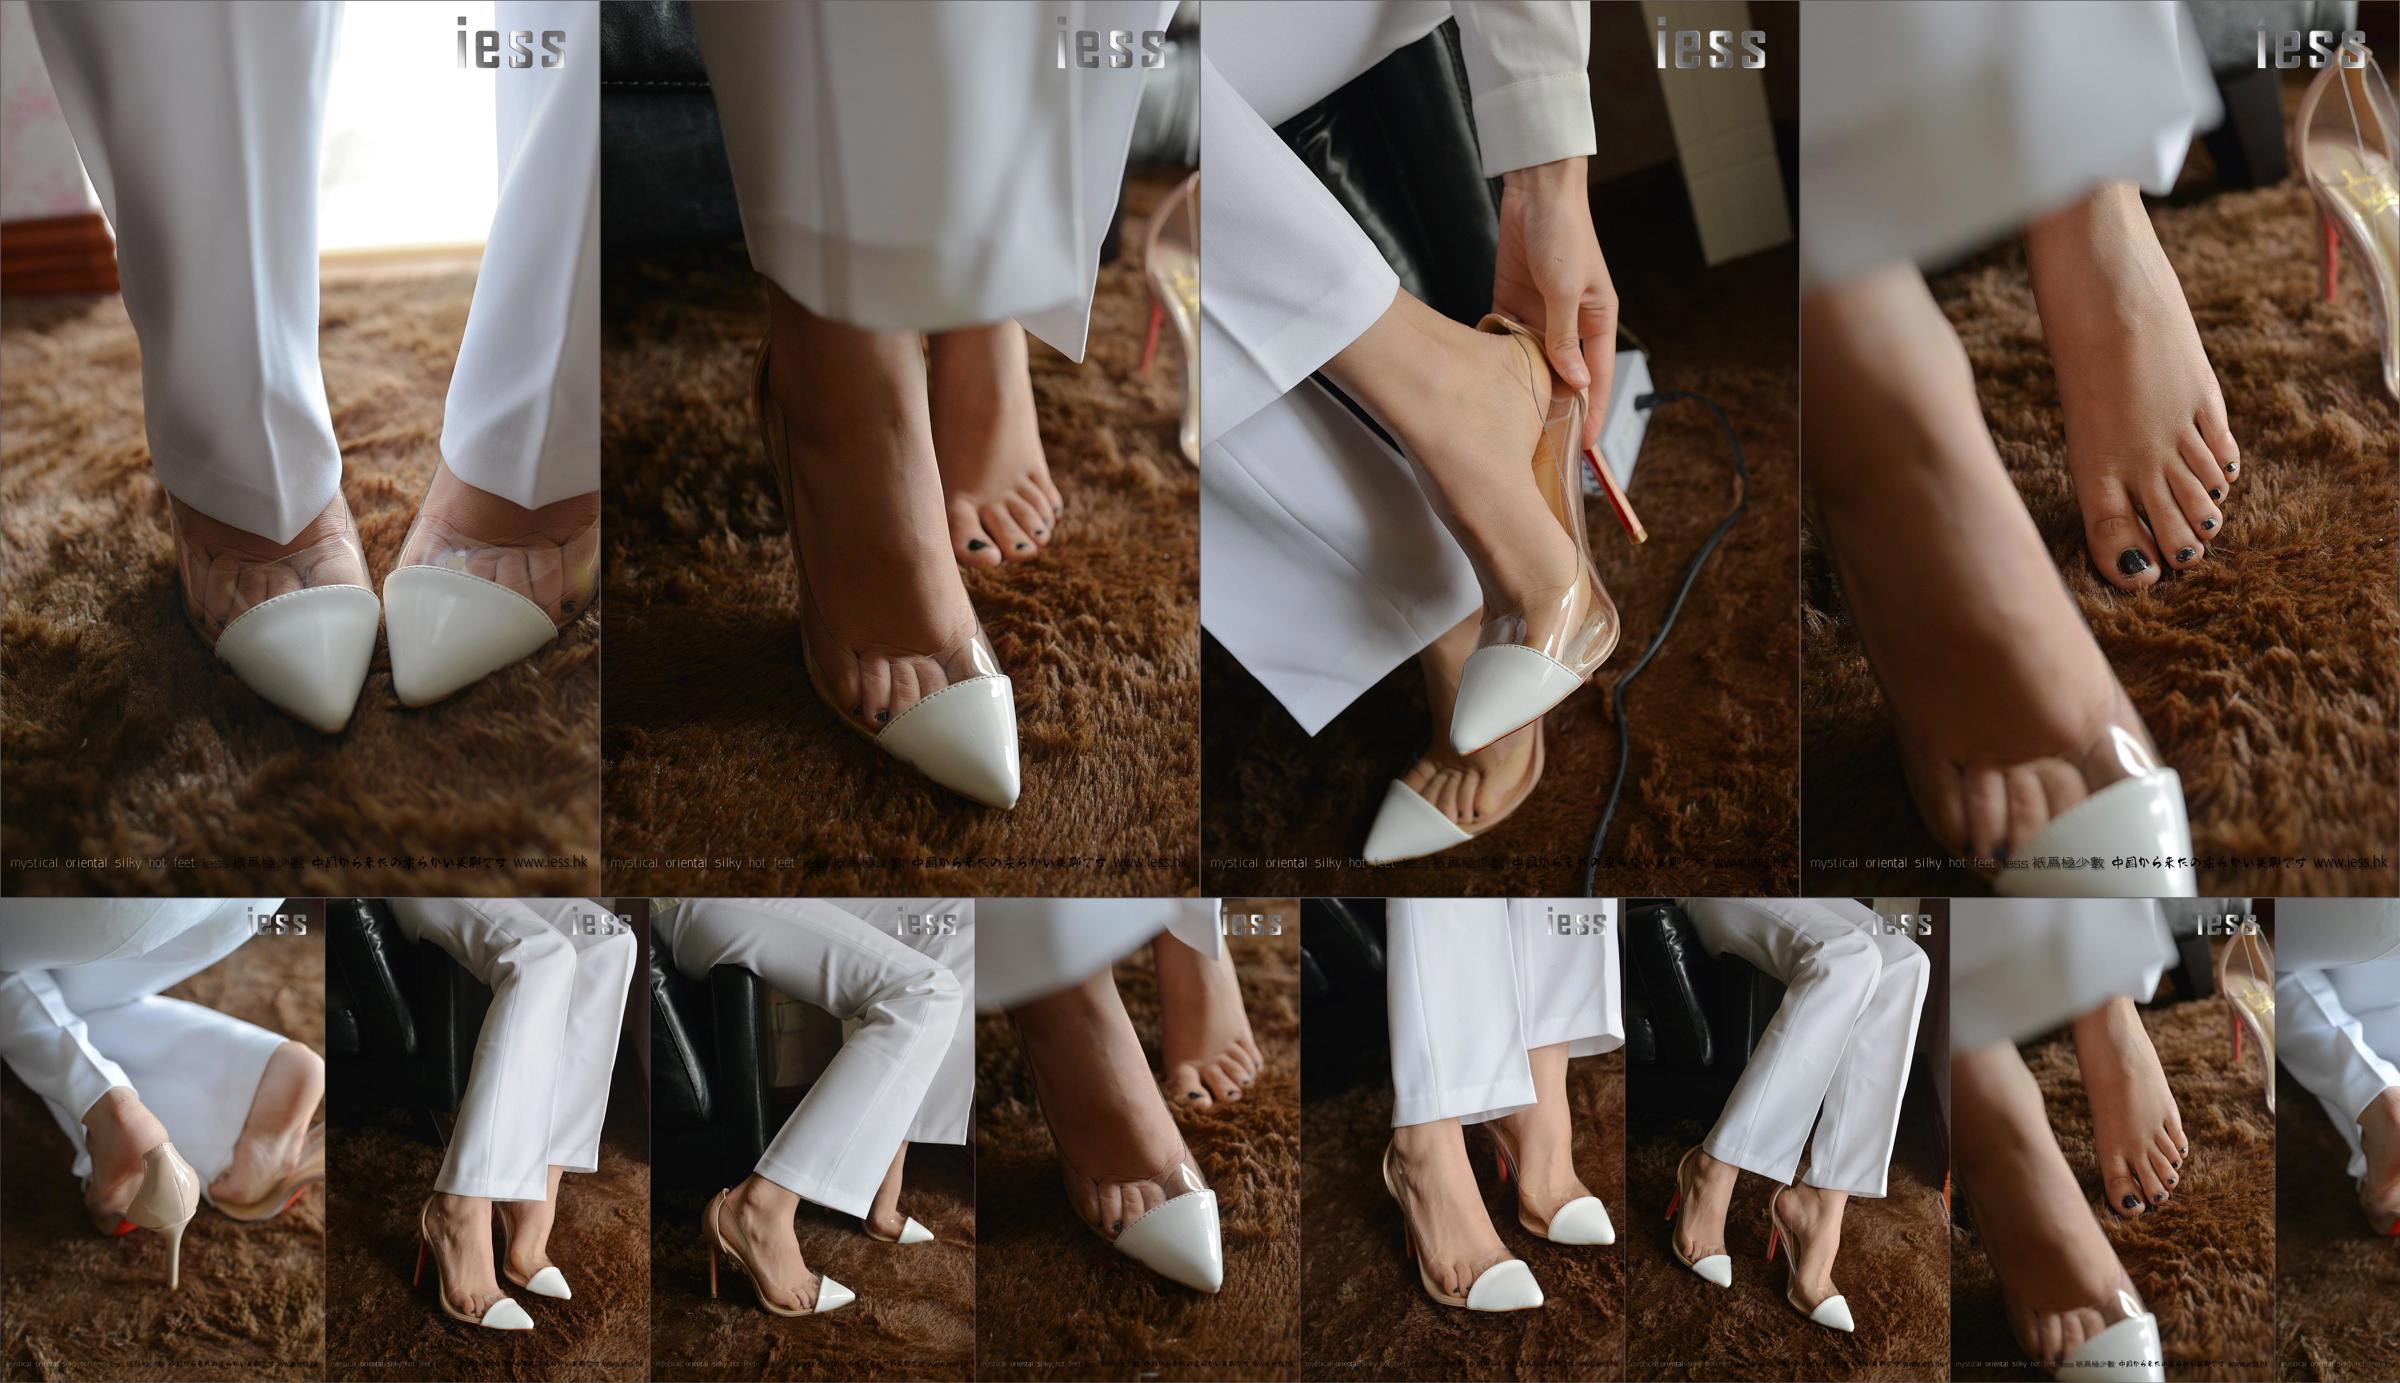 Silky Foot Bento 058 Suspense "Collection-Bare Foot High Heels" [IESS Wei Si Fun Xiang] No.aed7eb Halaman 2